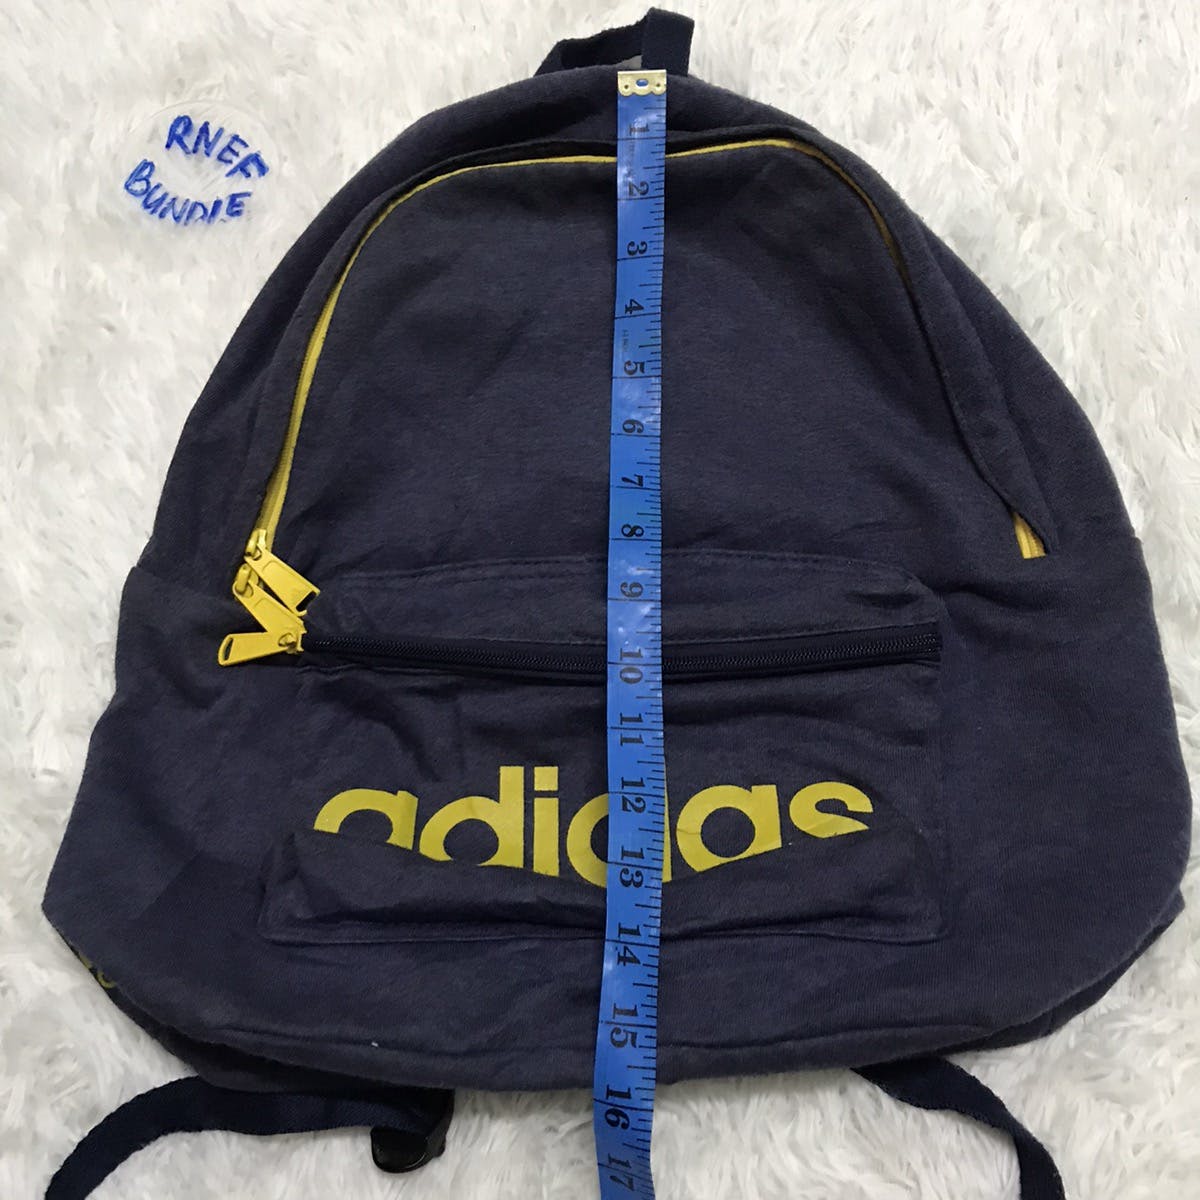 Adidas Backpack - 8